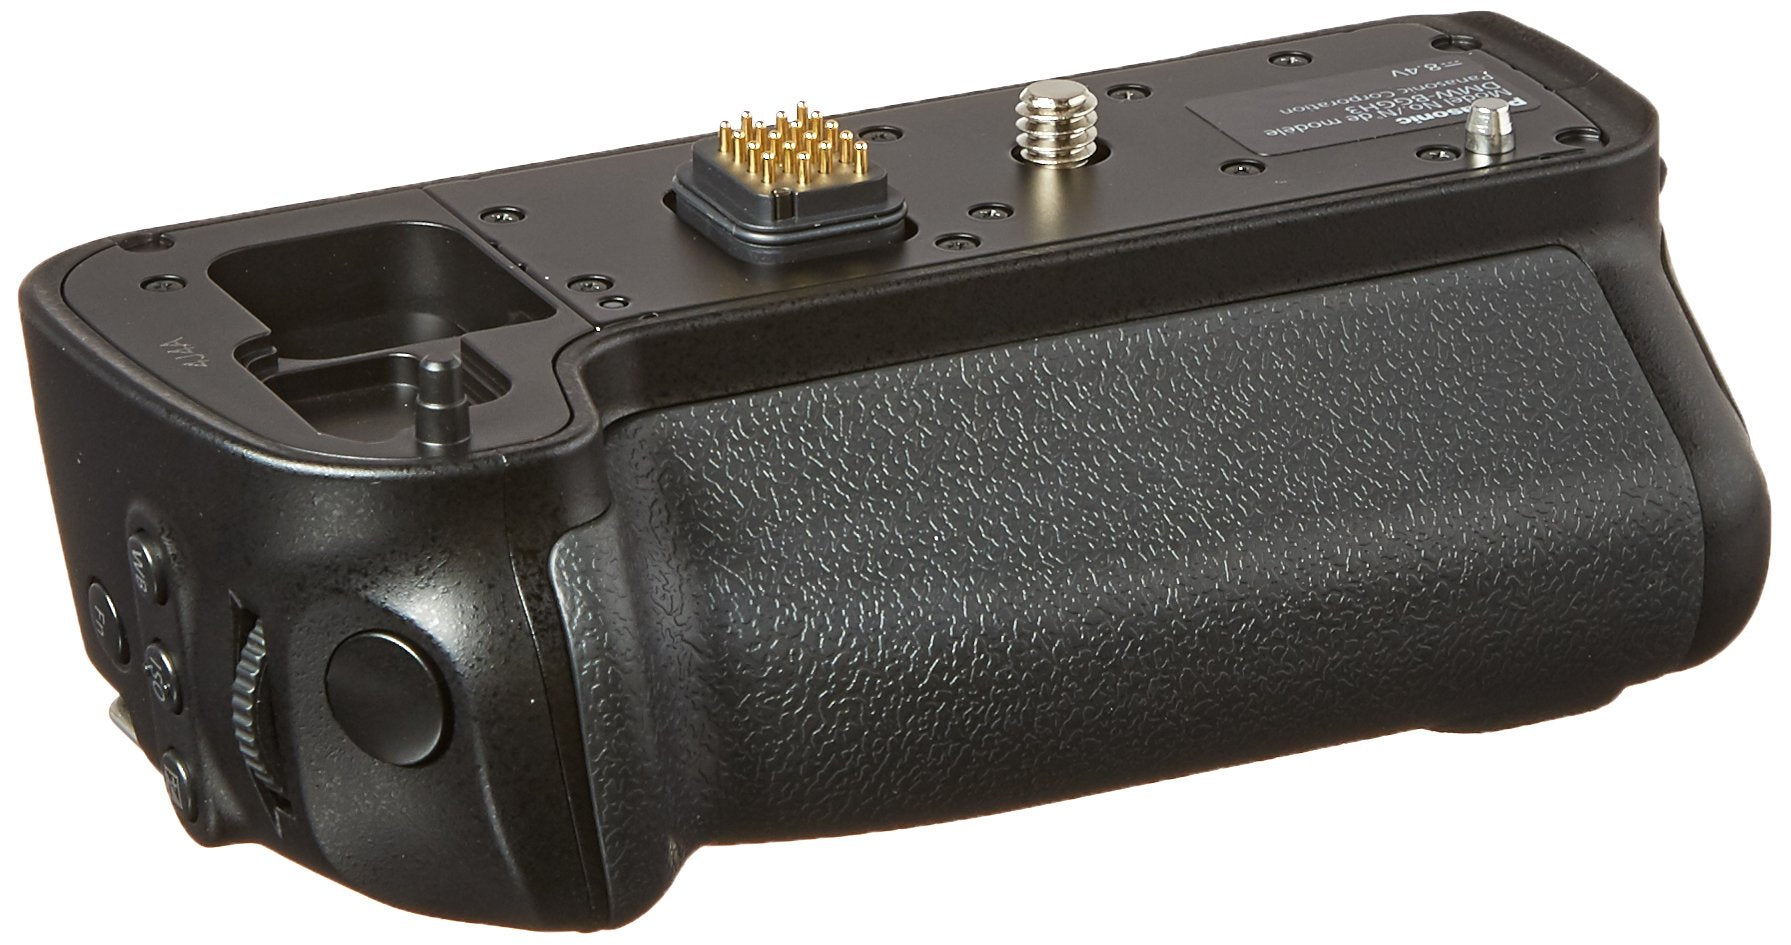 Panasonic DMW-BGGH3 Battery Grip for Lumix GH3 Cameras